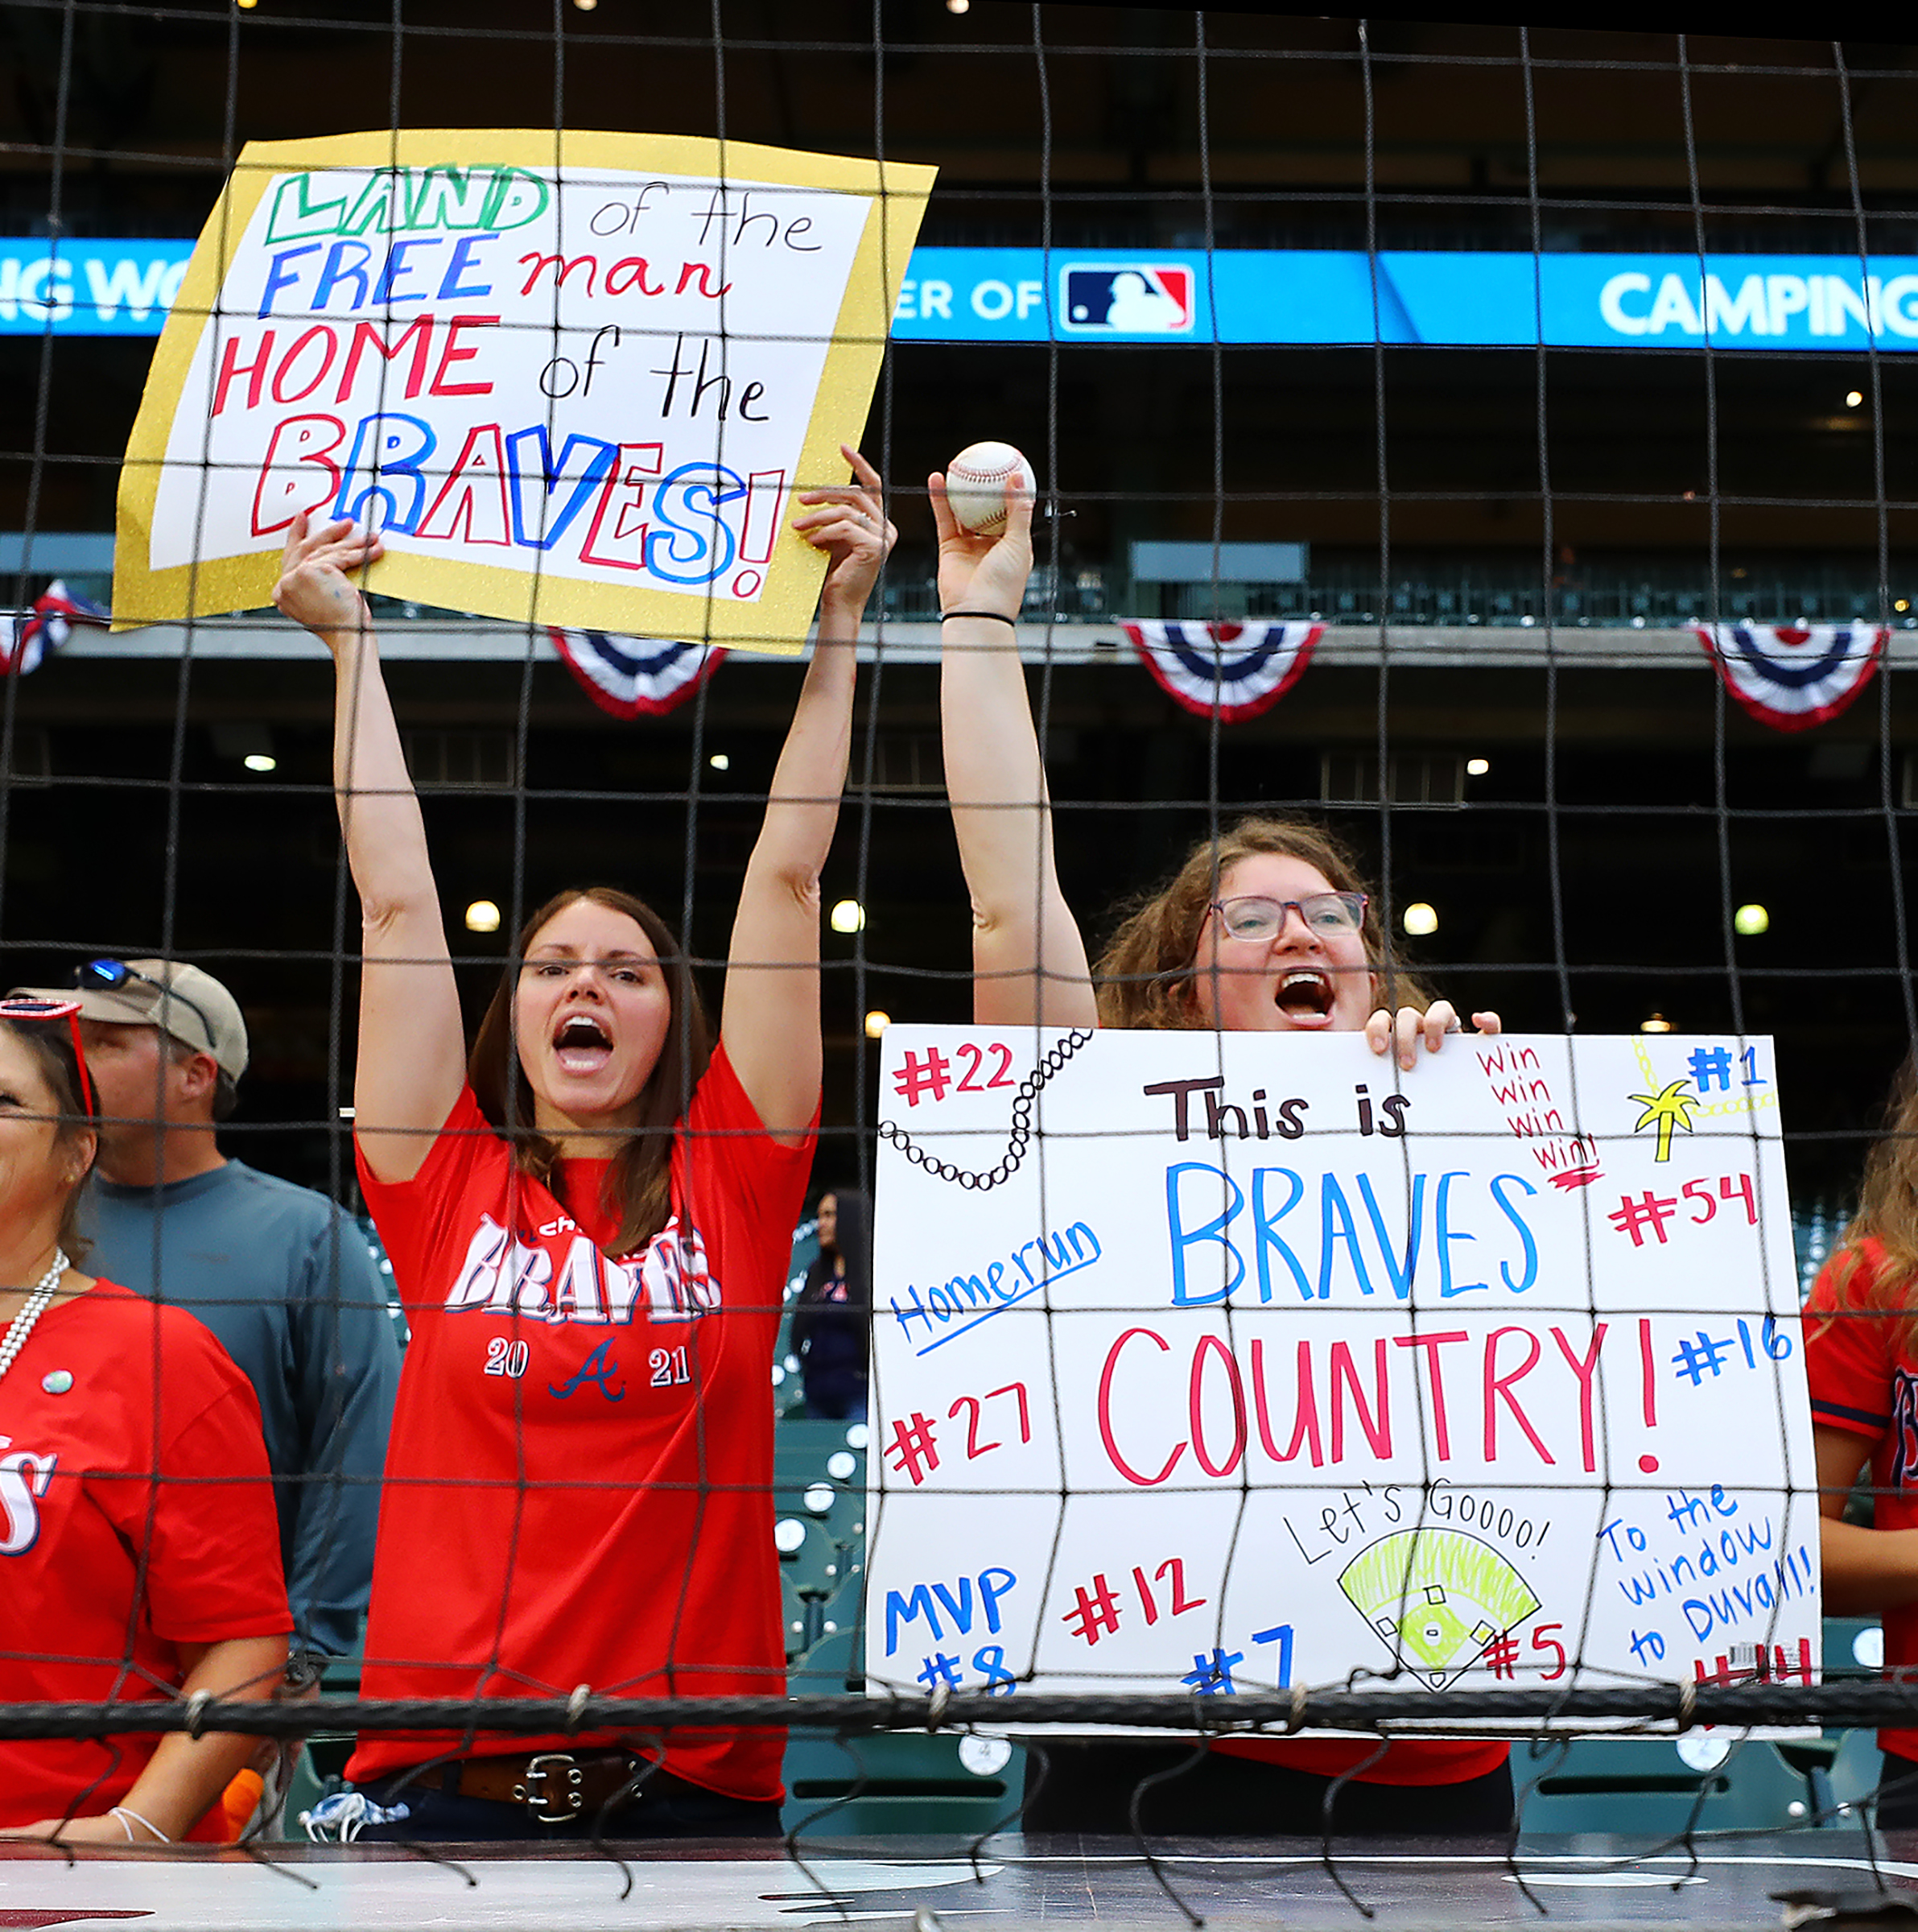 Photos: Scenes From World Series Game 6 – Houston Public Media